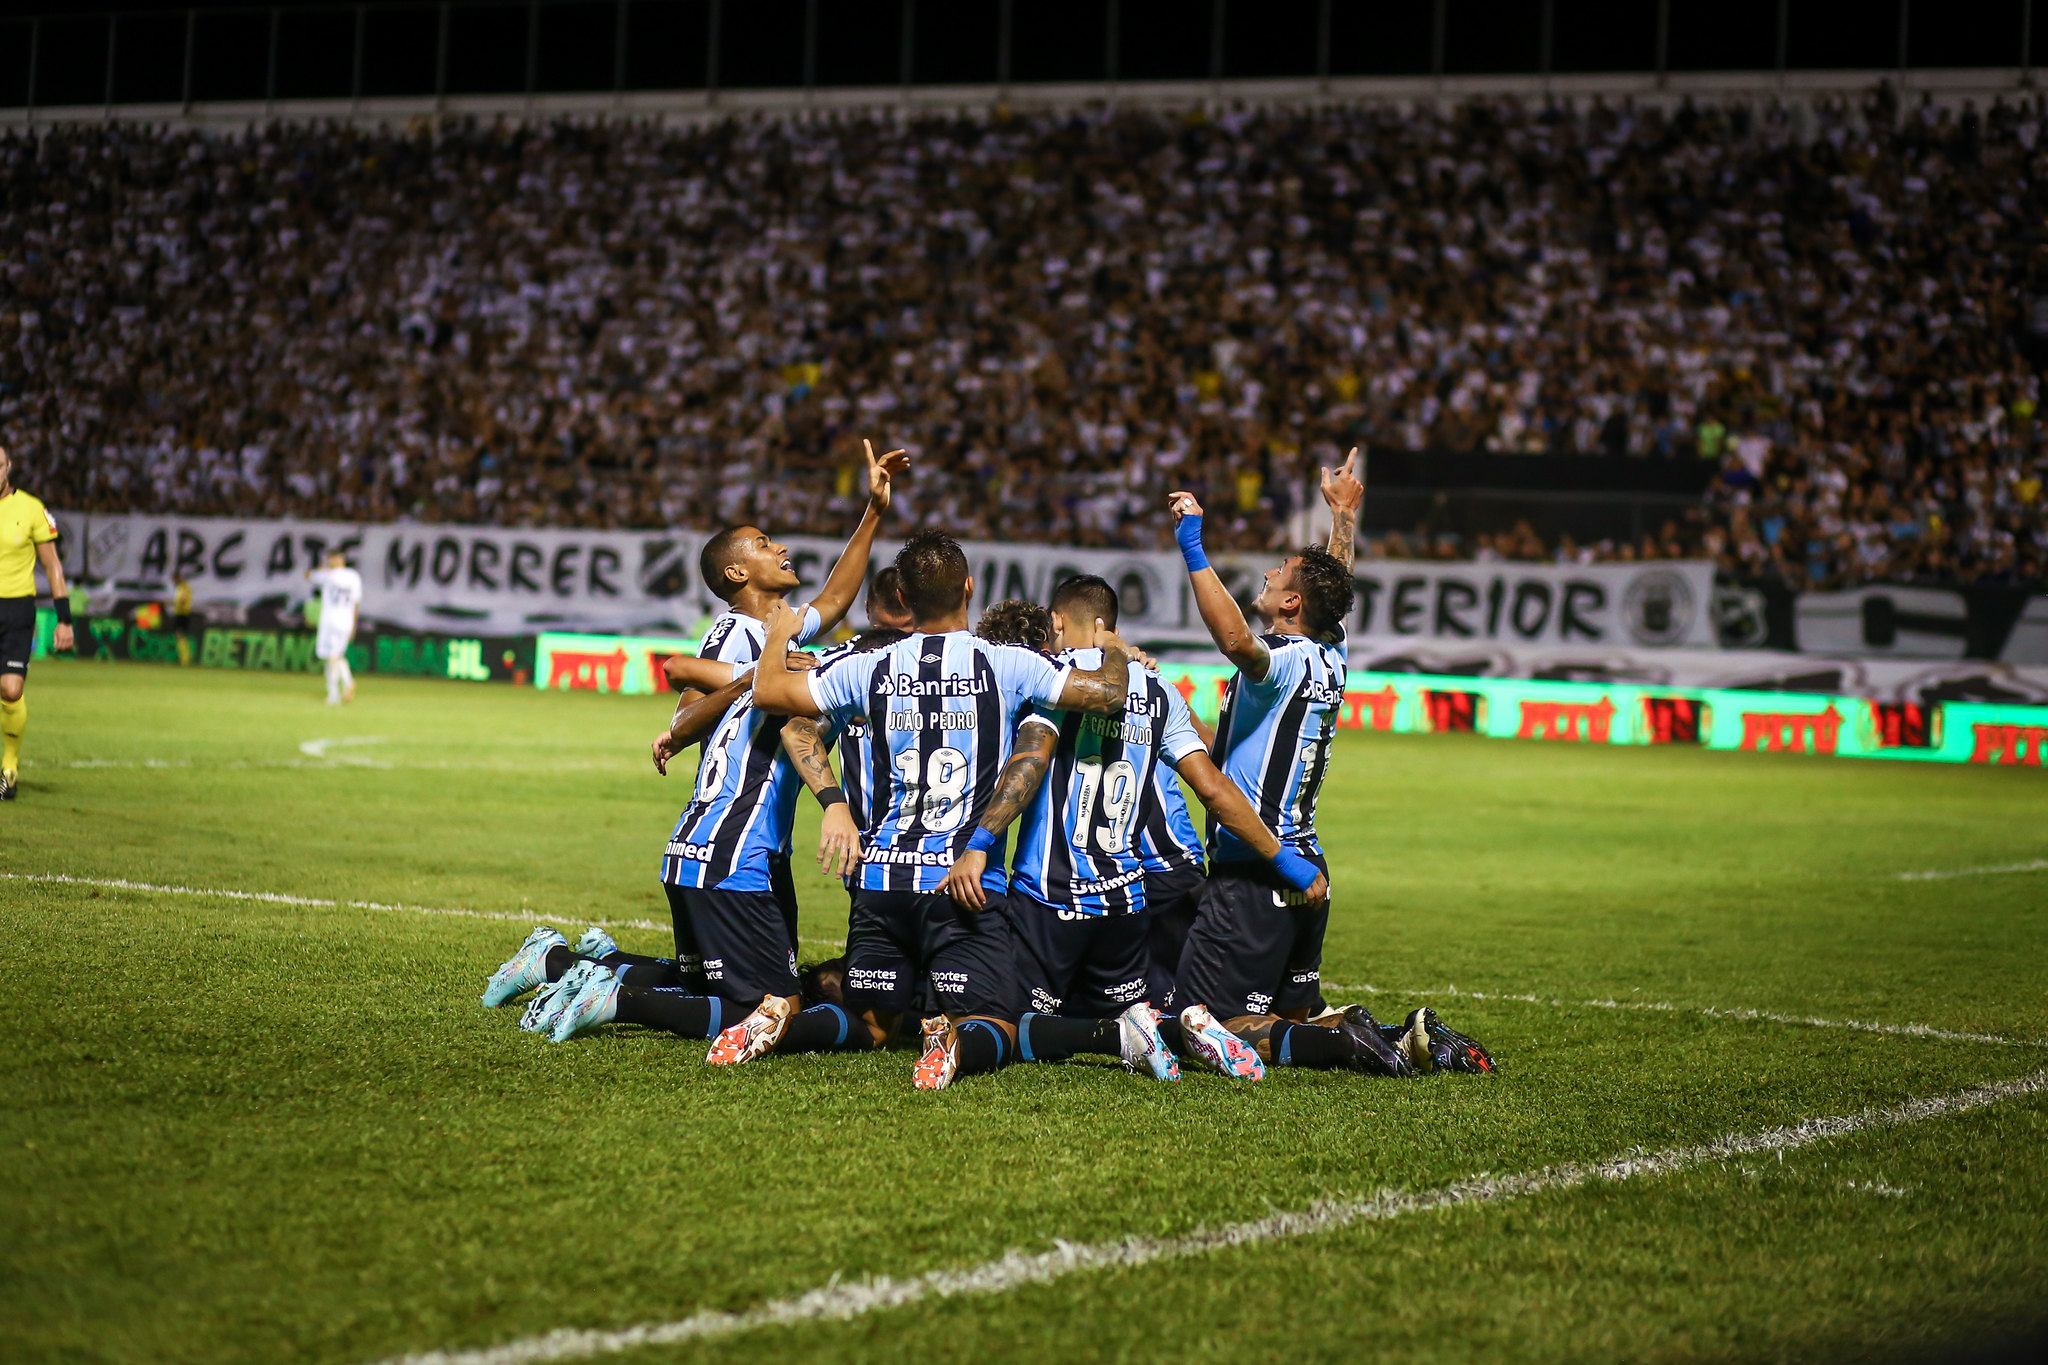 Grêmio vs. [Opponent Name]: A Battle of Football Titans